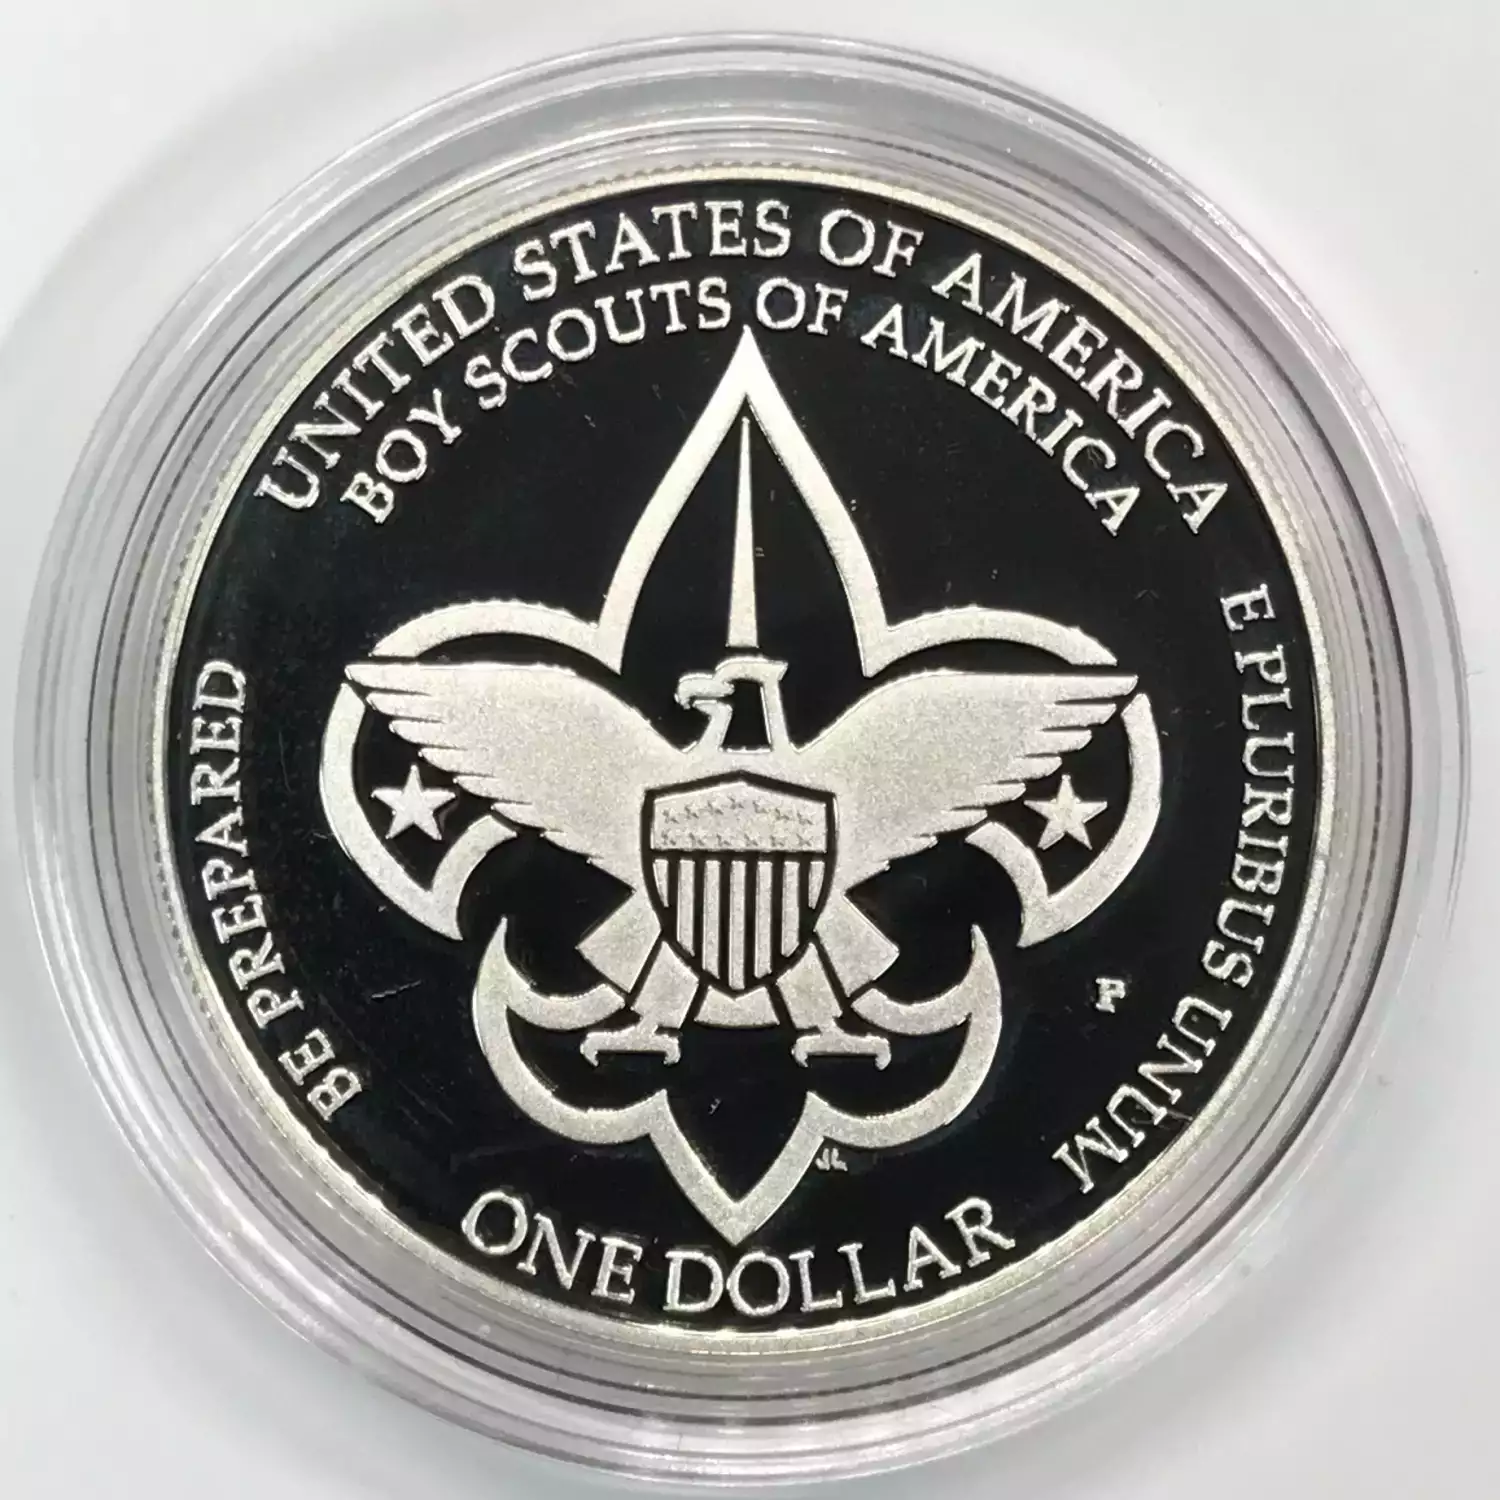 2010-P Boy Scouts of America (BSA) Proof Silver Dollar w US Mint OGP - Box & COA